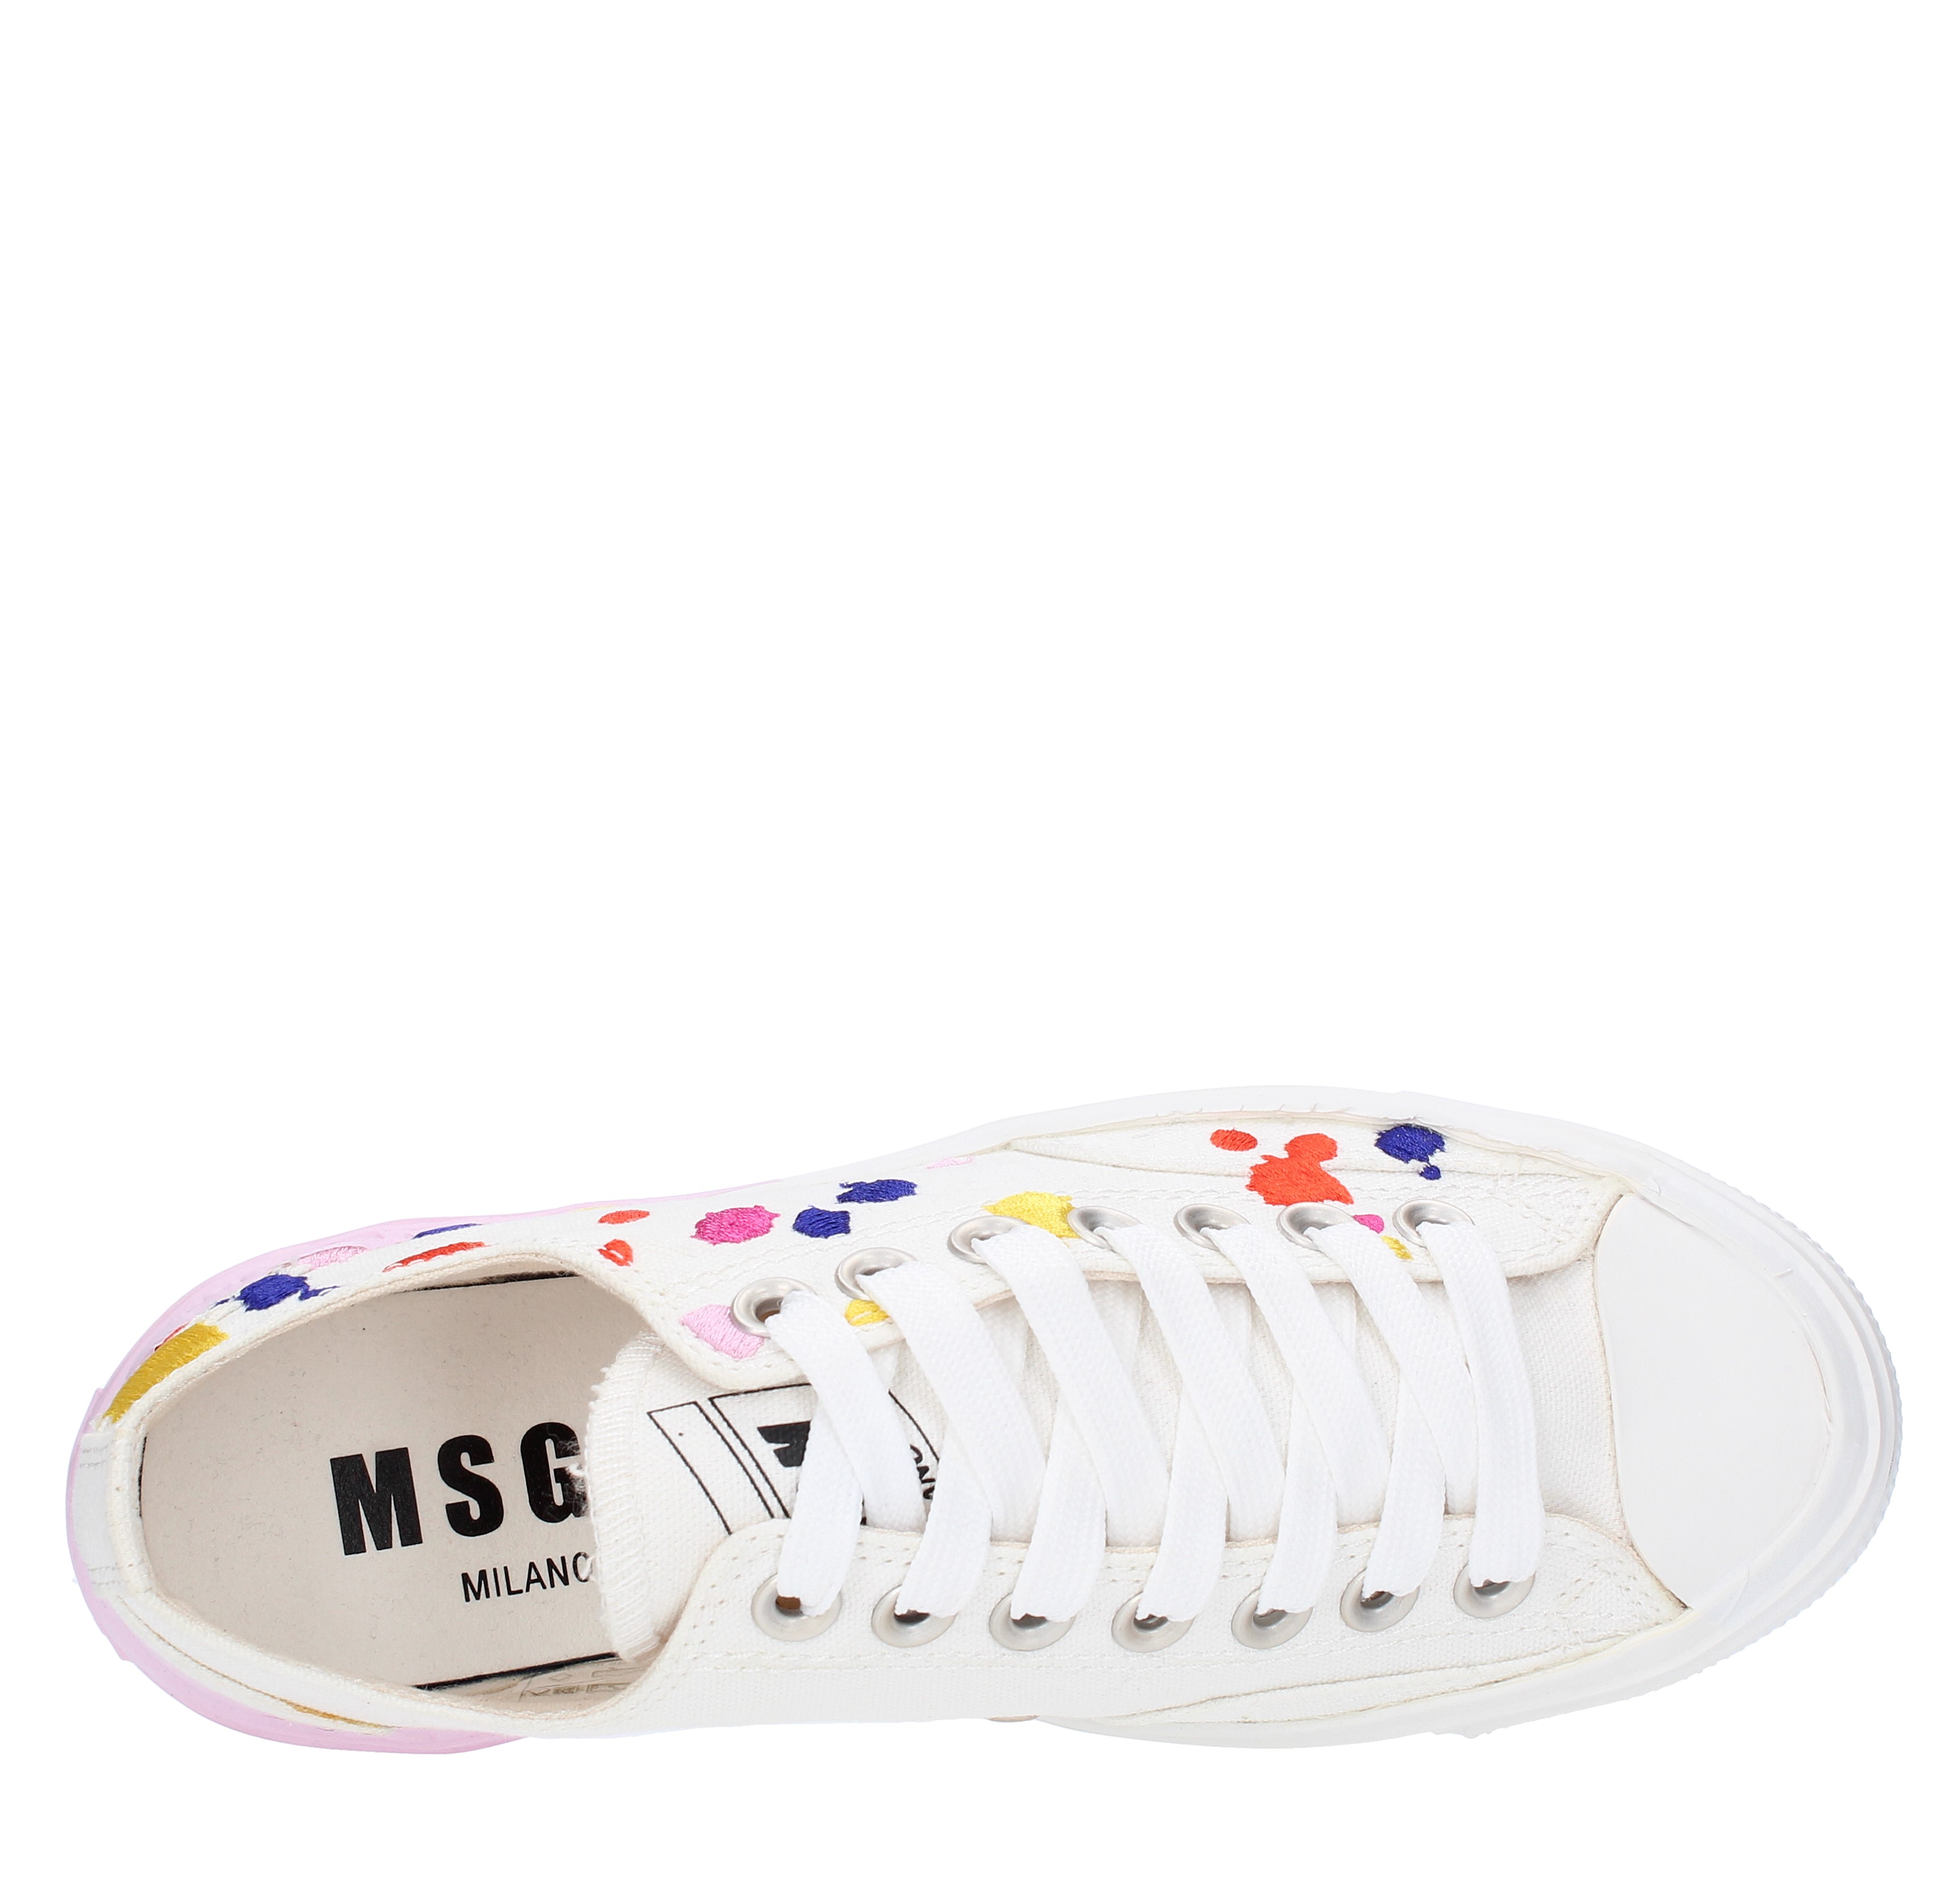 Sneakers in tessuto - MSGM - Ginevra calzature